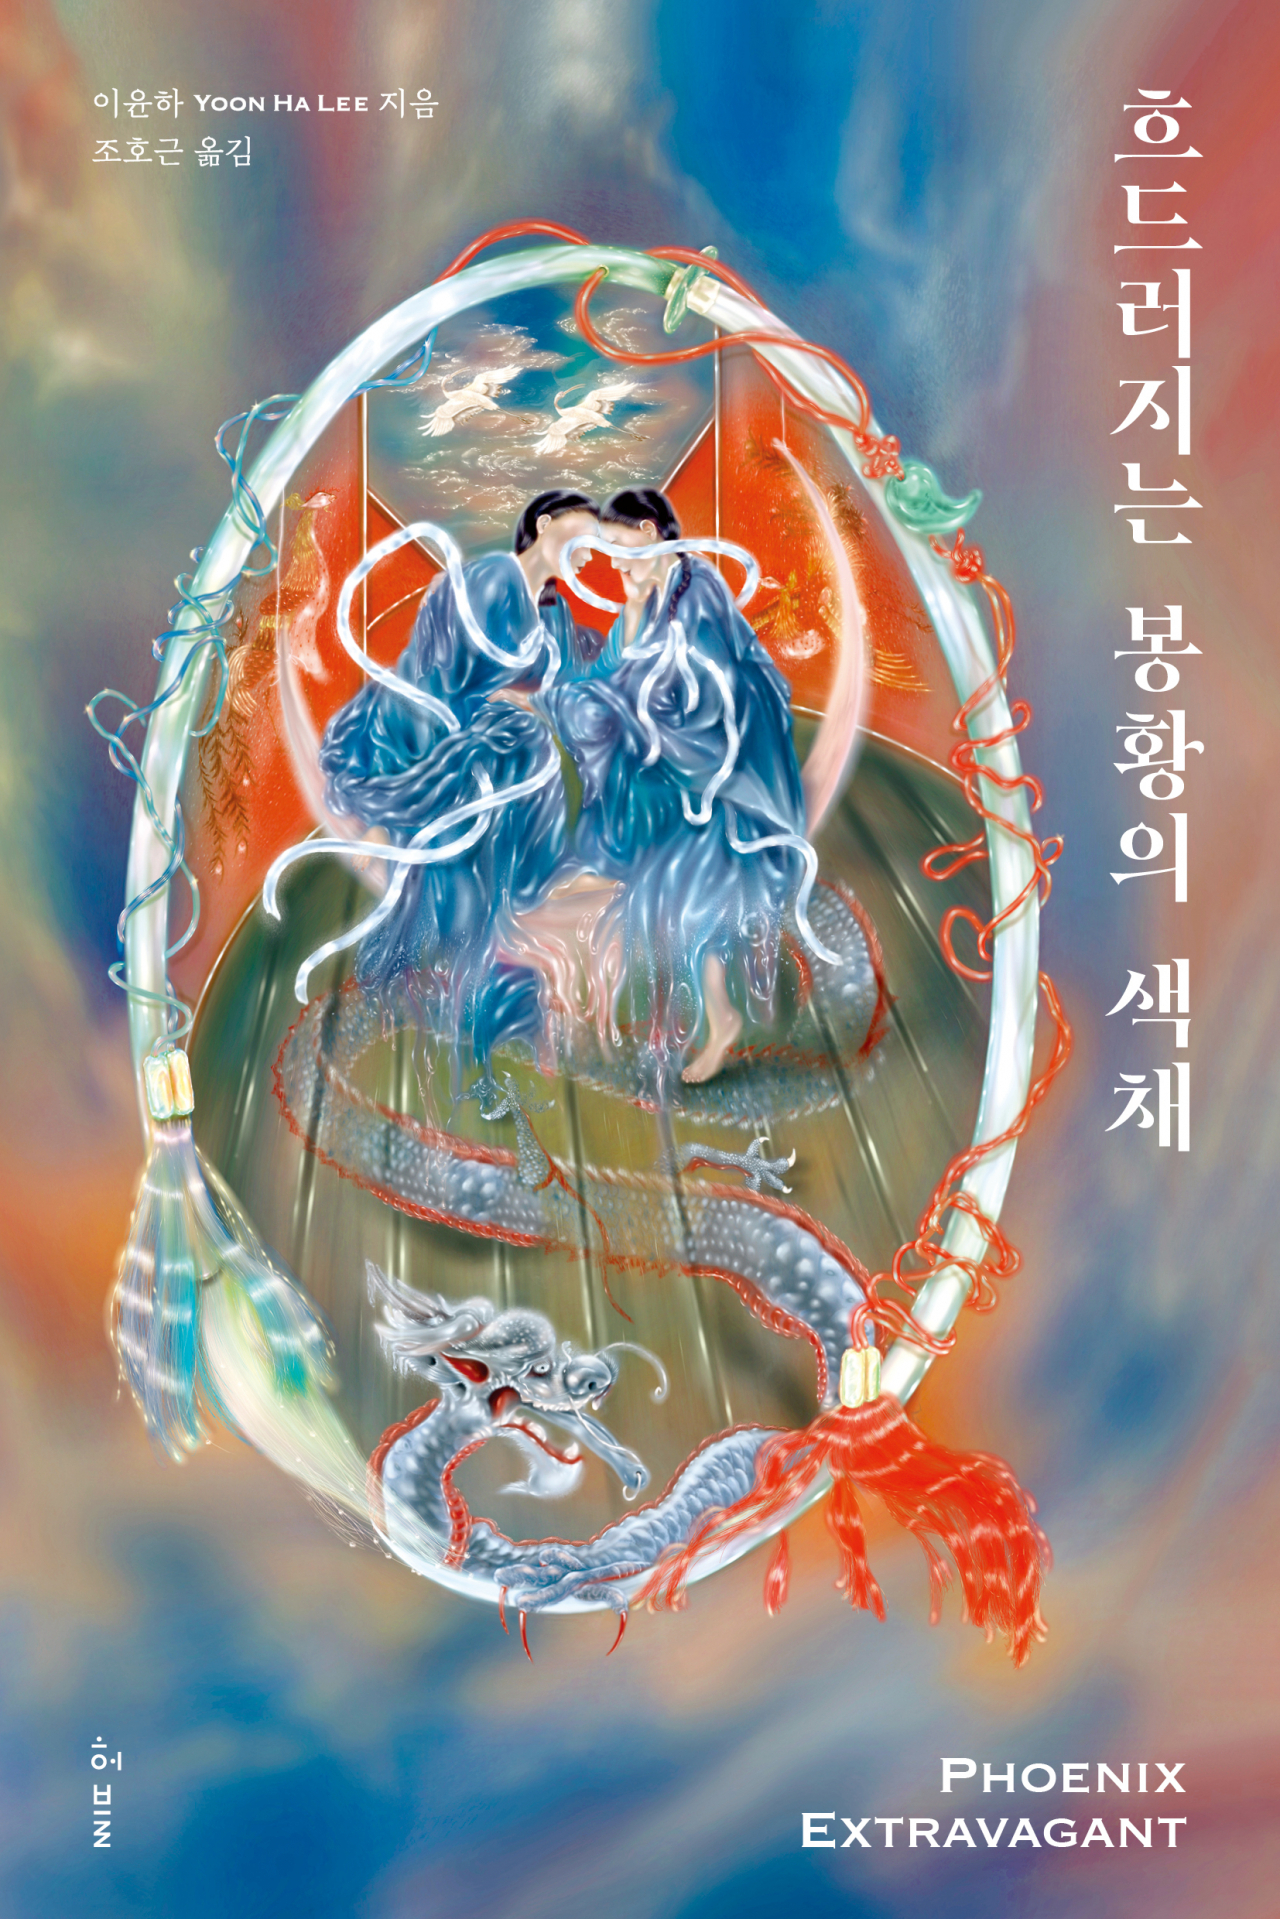 Korean edition of 